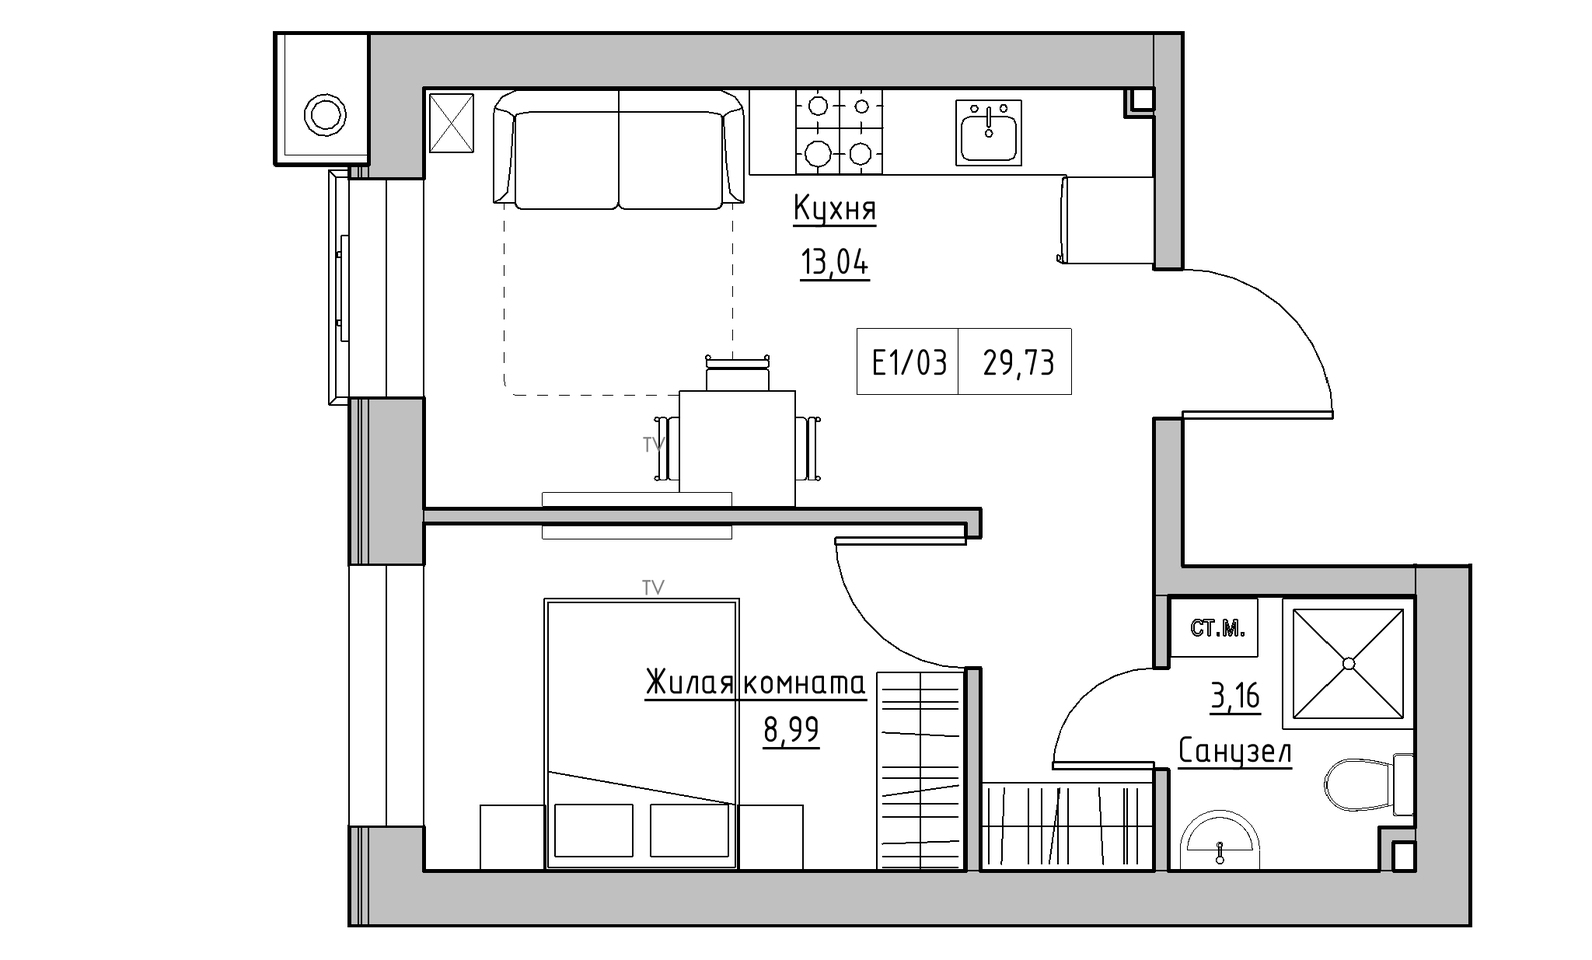 Planning 1-rm flats area 29.73m2, KS-014-01/0012.